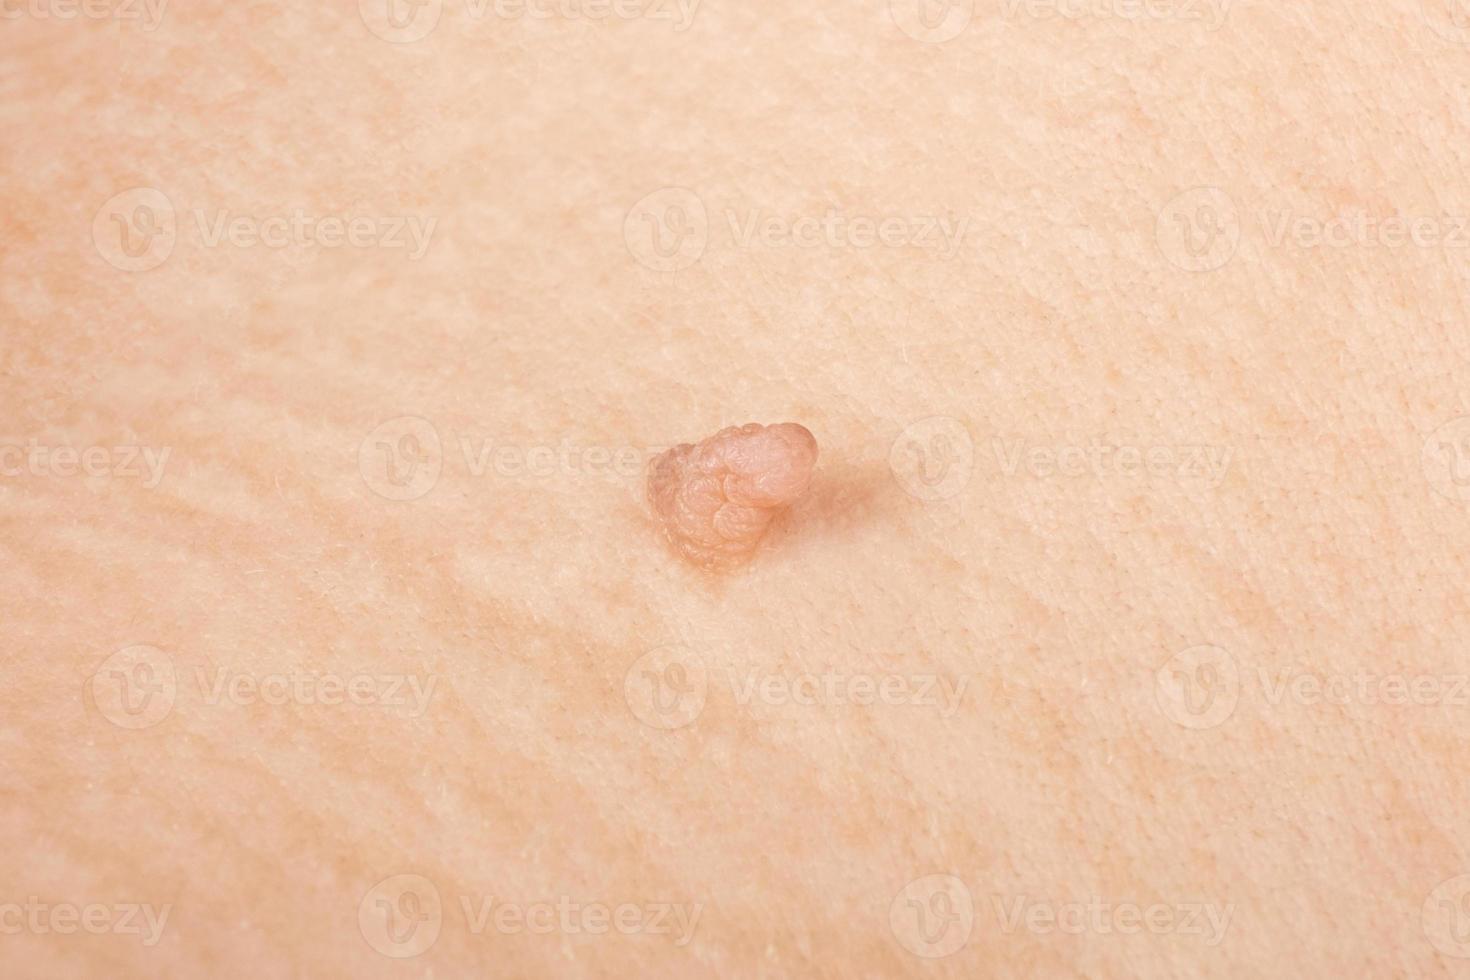 papilloma close-up, grote moedervlek op de huid foto